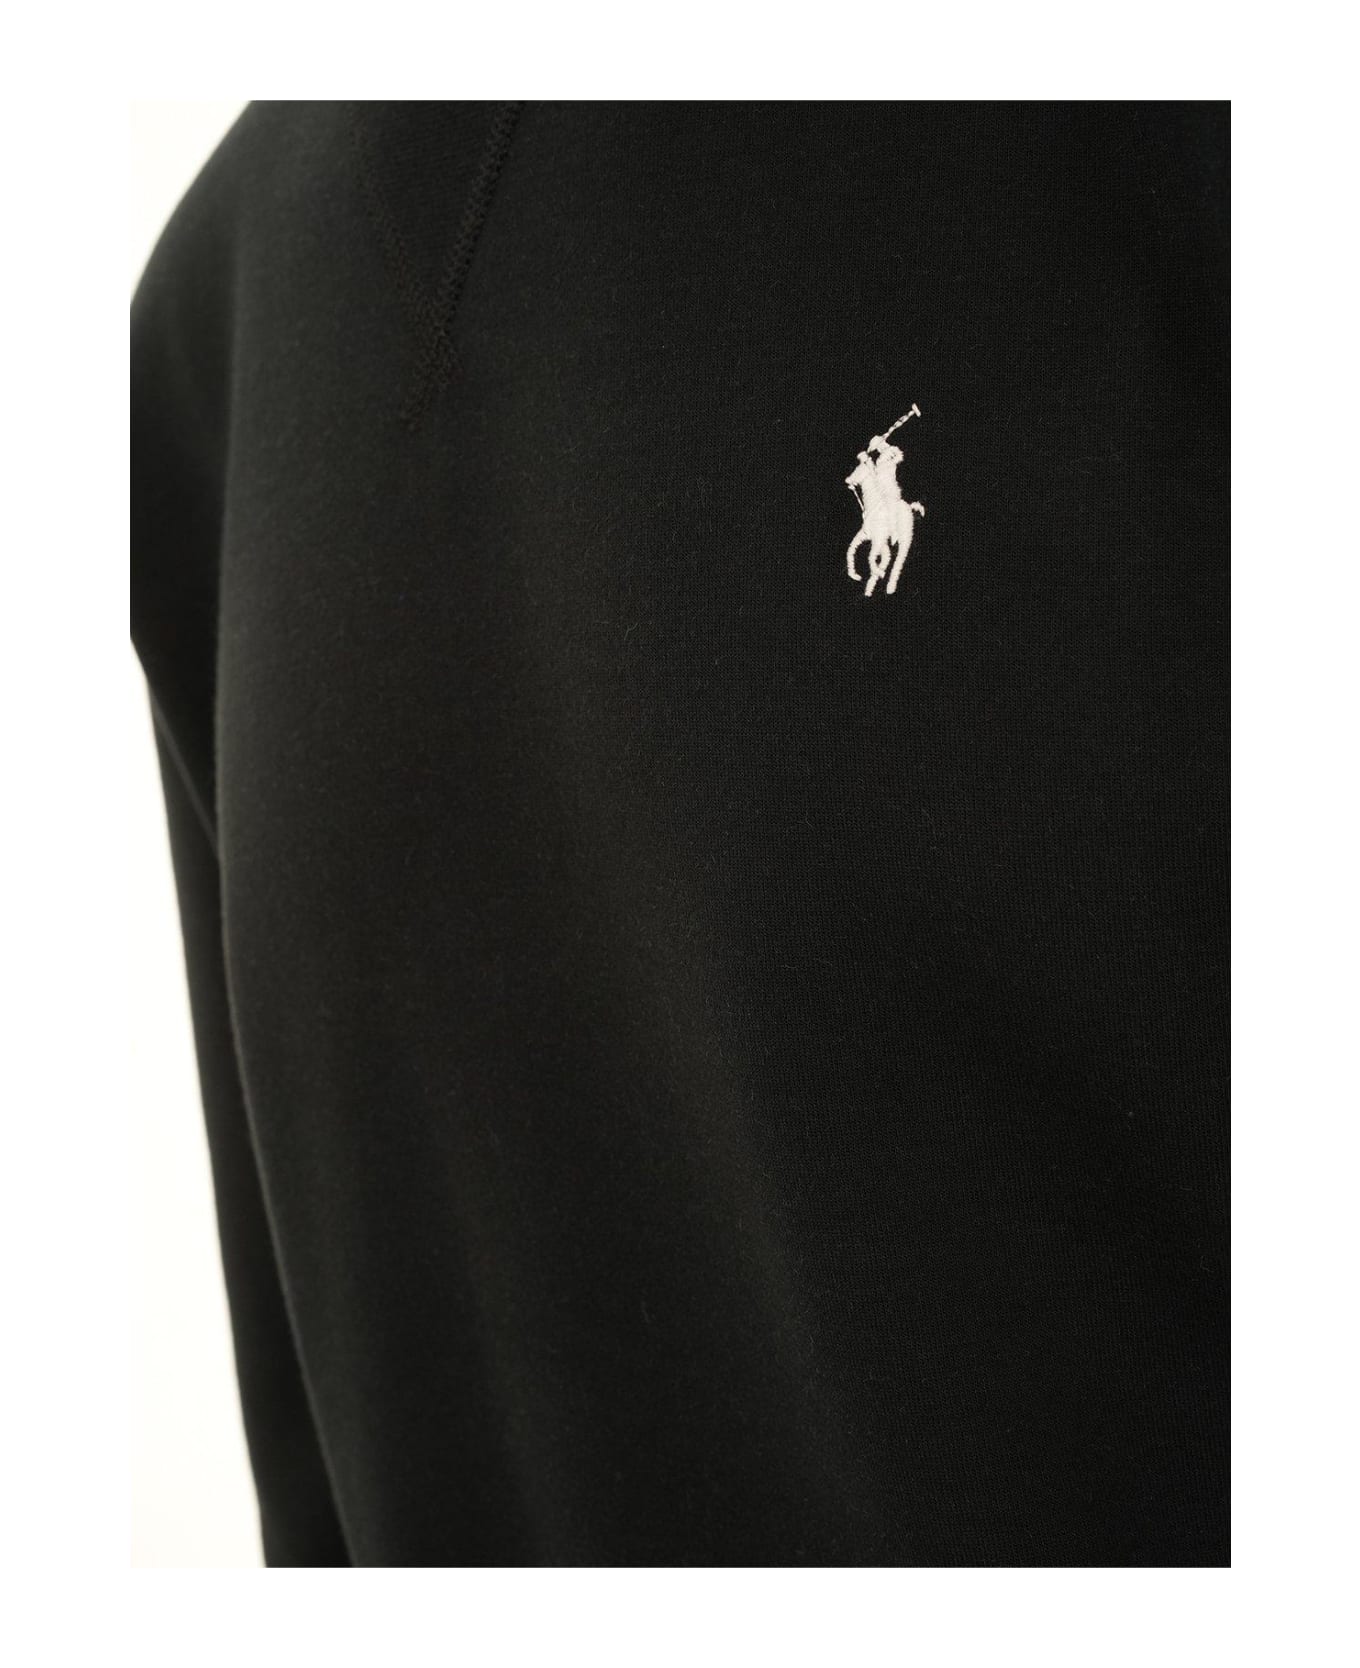 Ralph Lauren Pony Embroidered Crewneck Sweatshirt - Polo Black